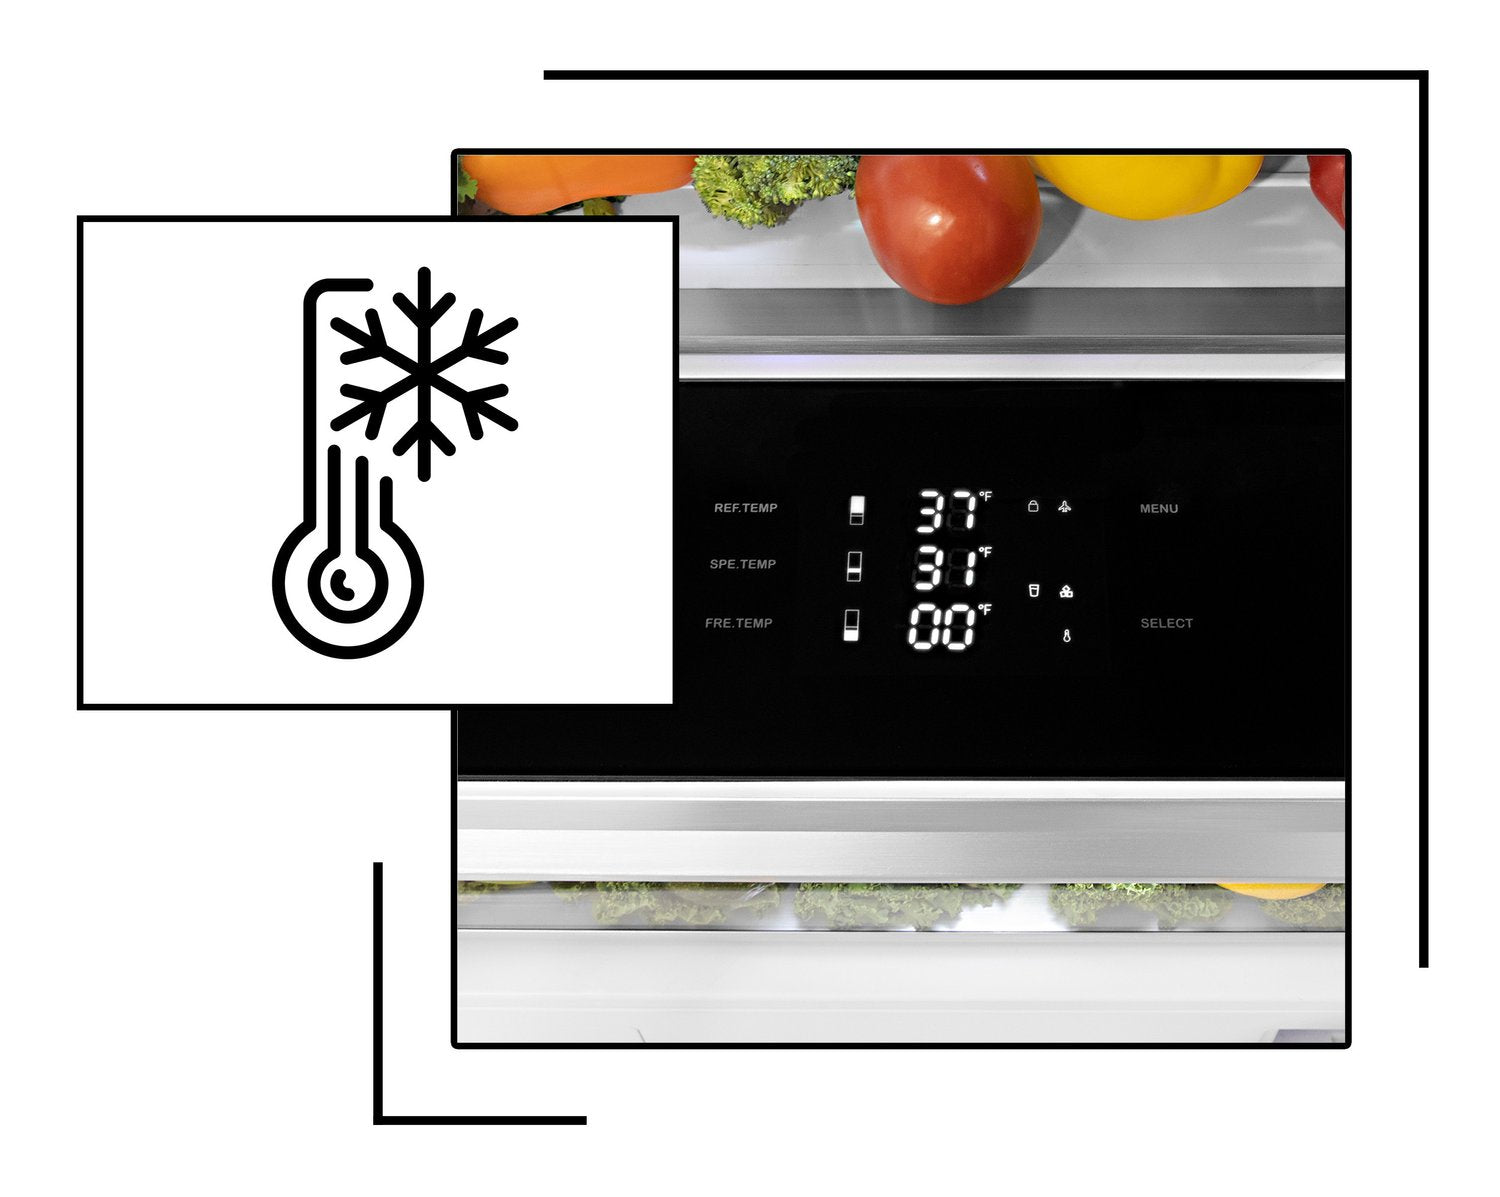 Icon and image representing adjustable freezer temperature zones